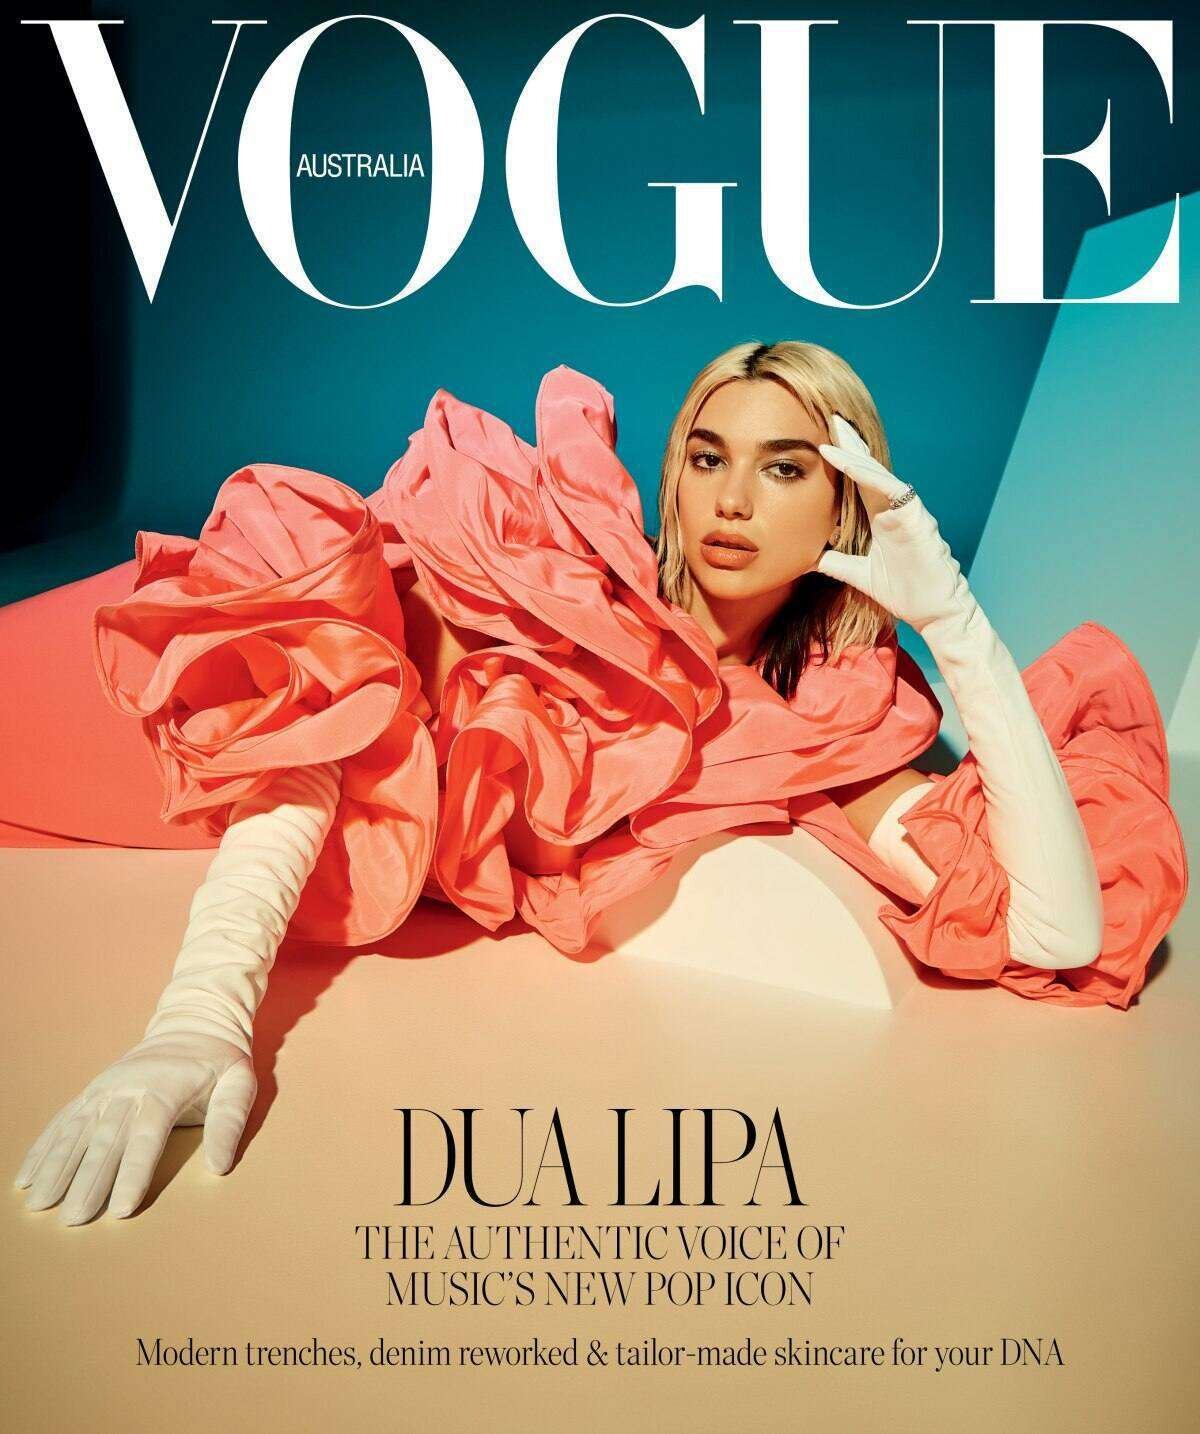 Dua Lipa for Vogue Australia April 2020 (7).jpg